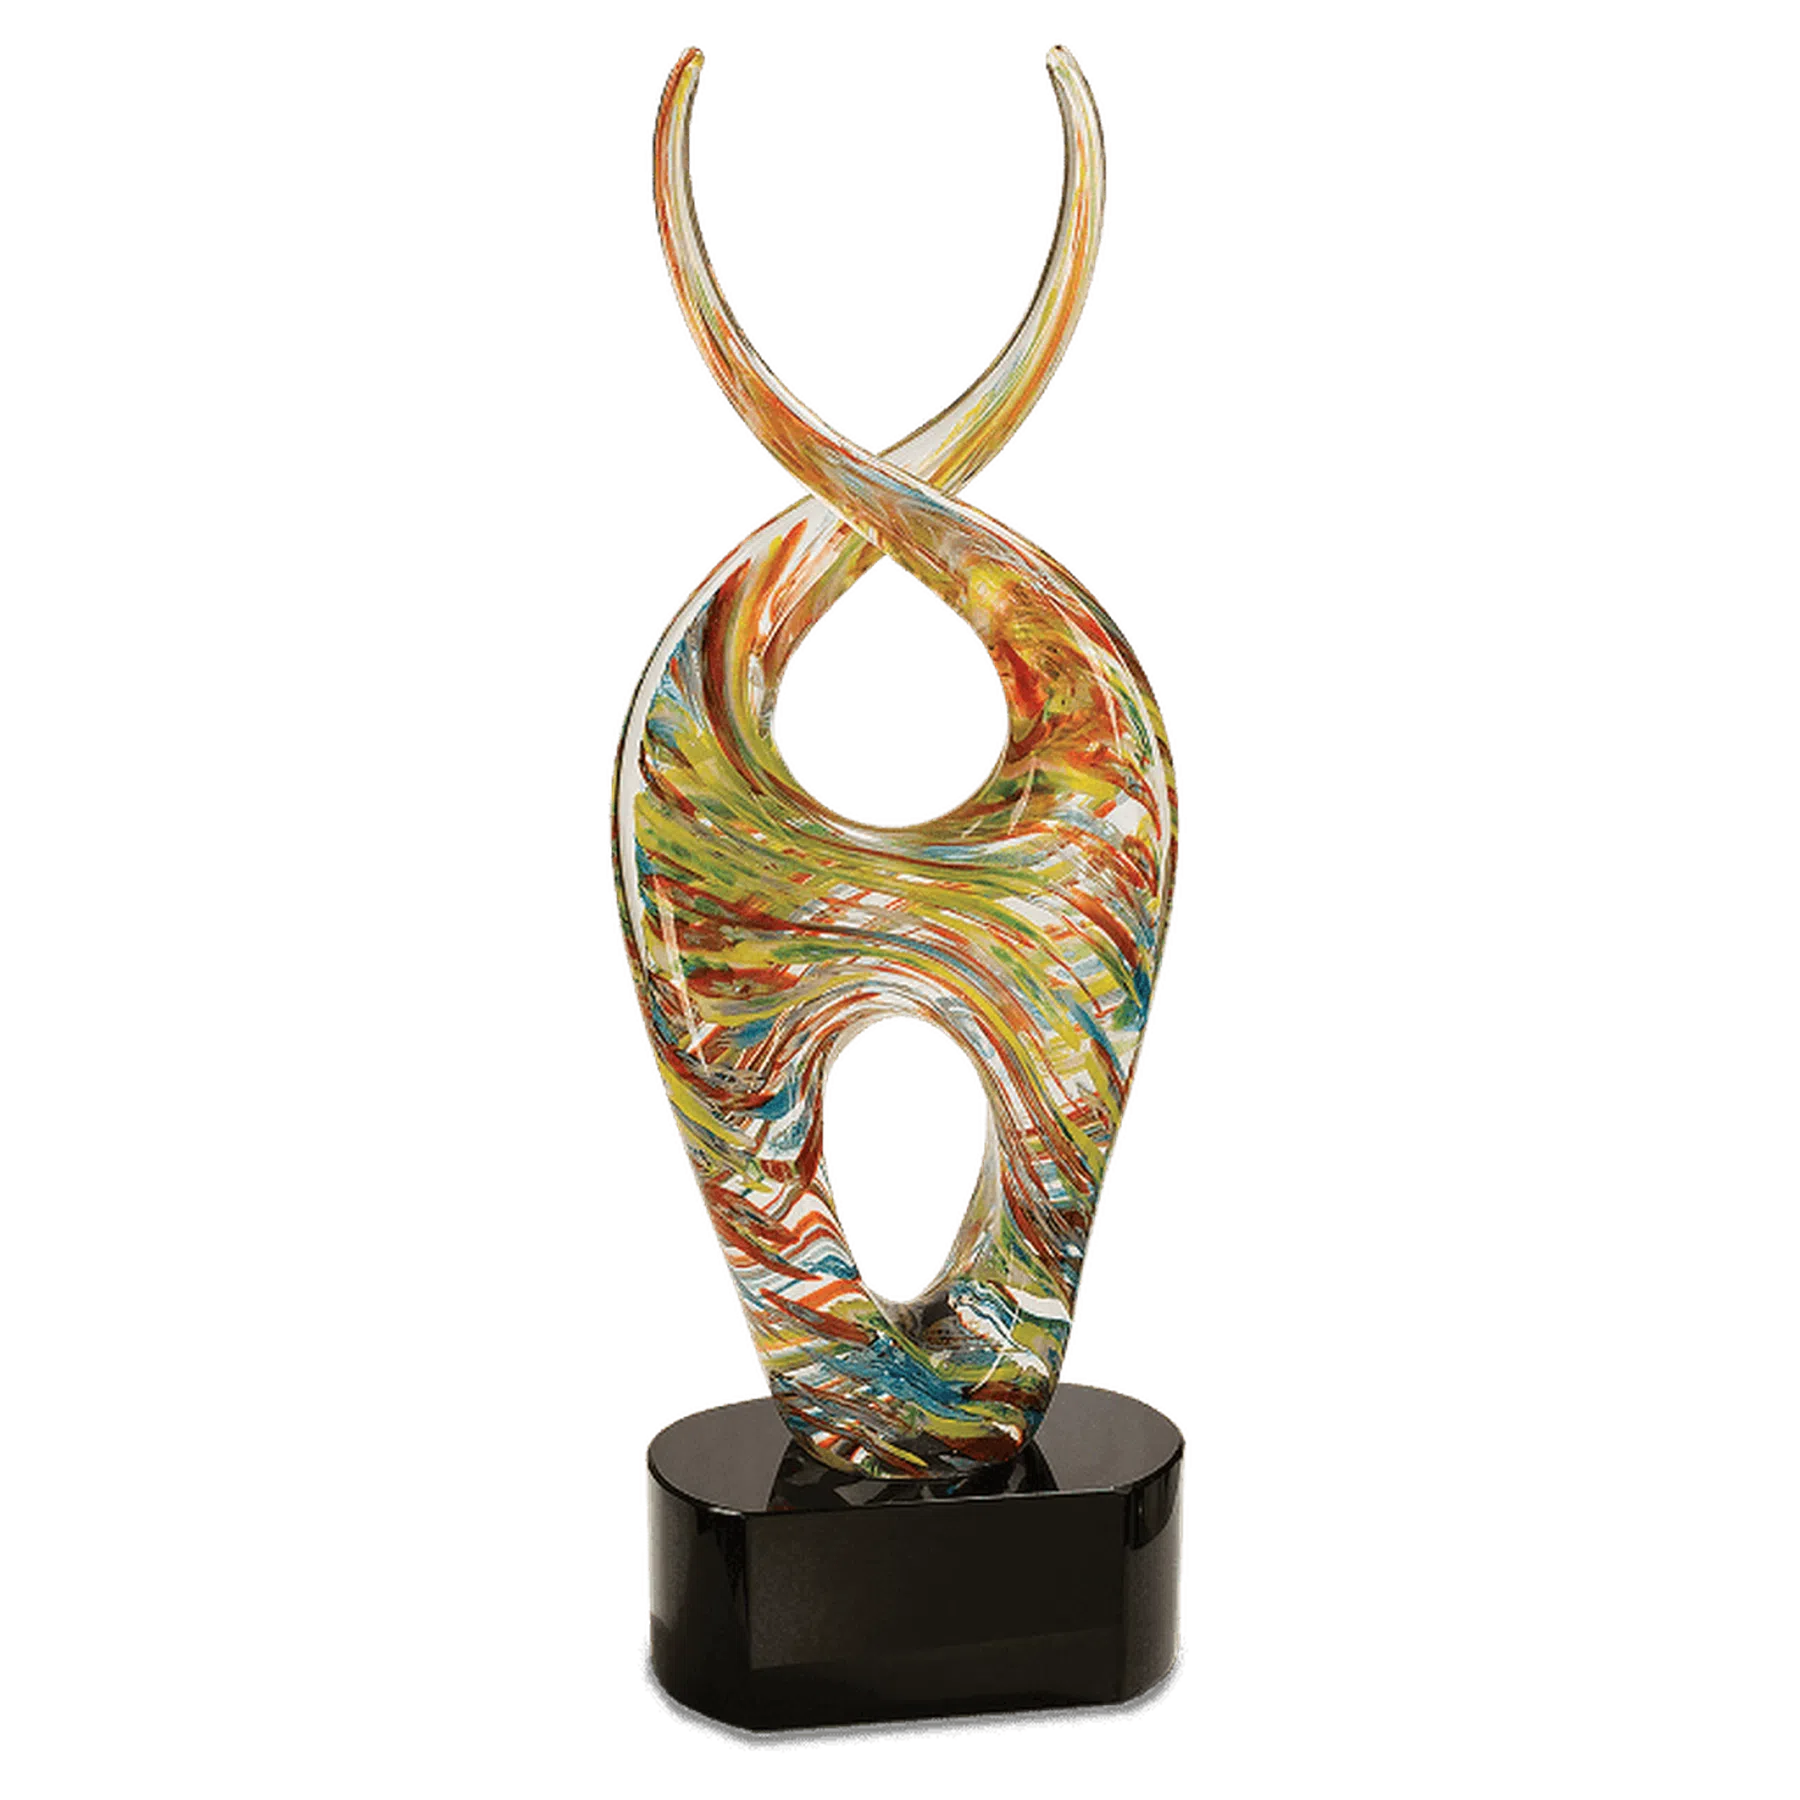 14" Color Twist Art Glass Award Sculpture